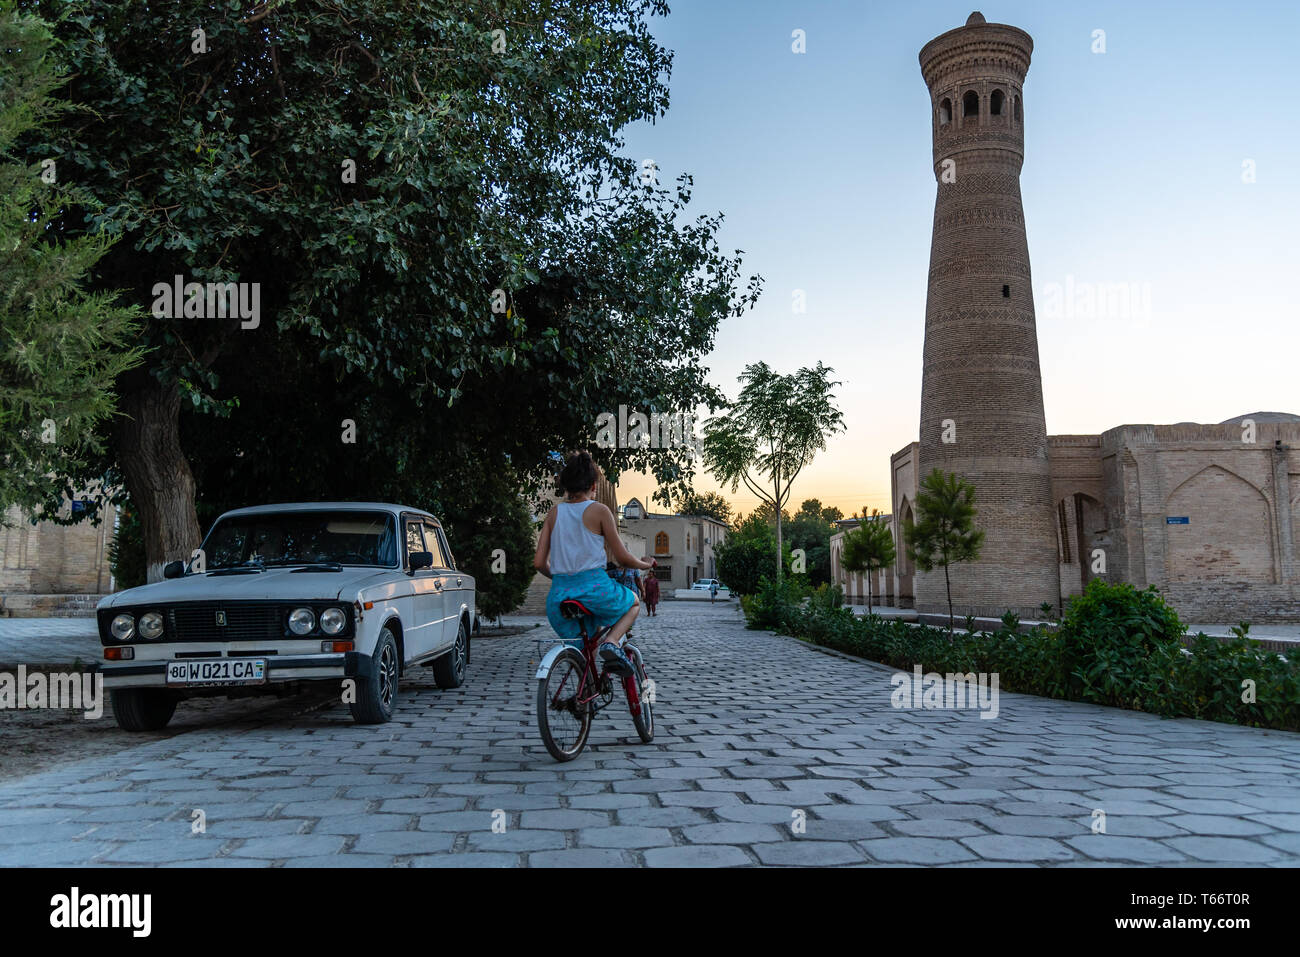 A Girl riding her Bicycle around a Soviet Era Car in Bukhara, Uzbekistan Stock Photo